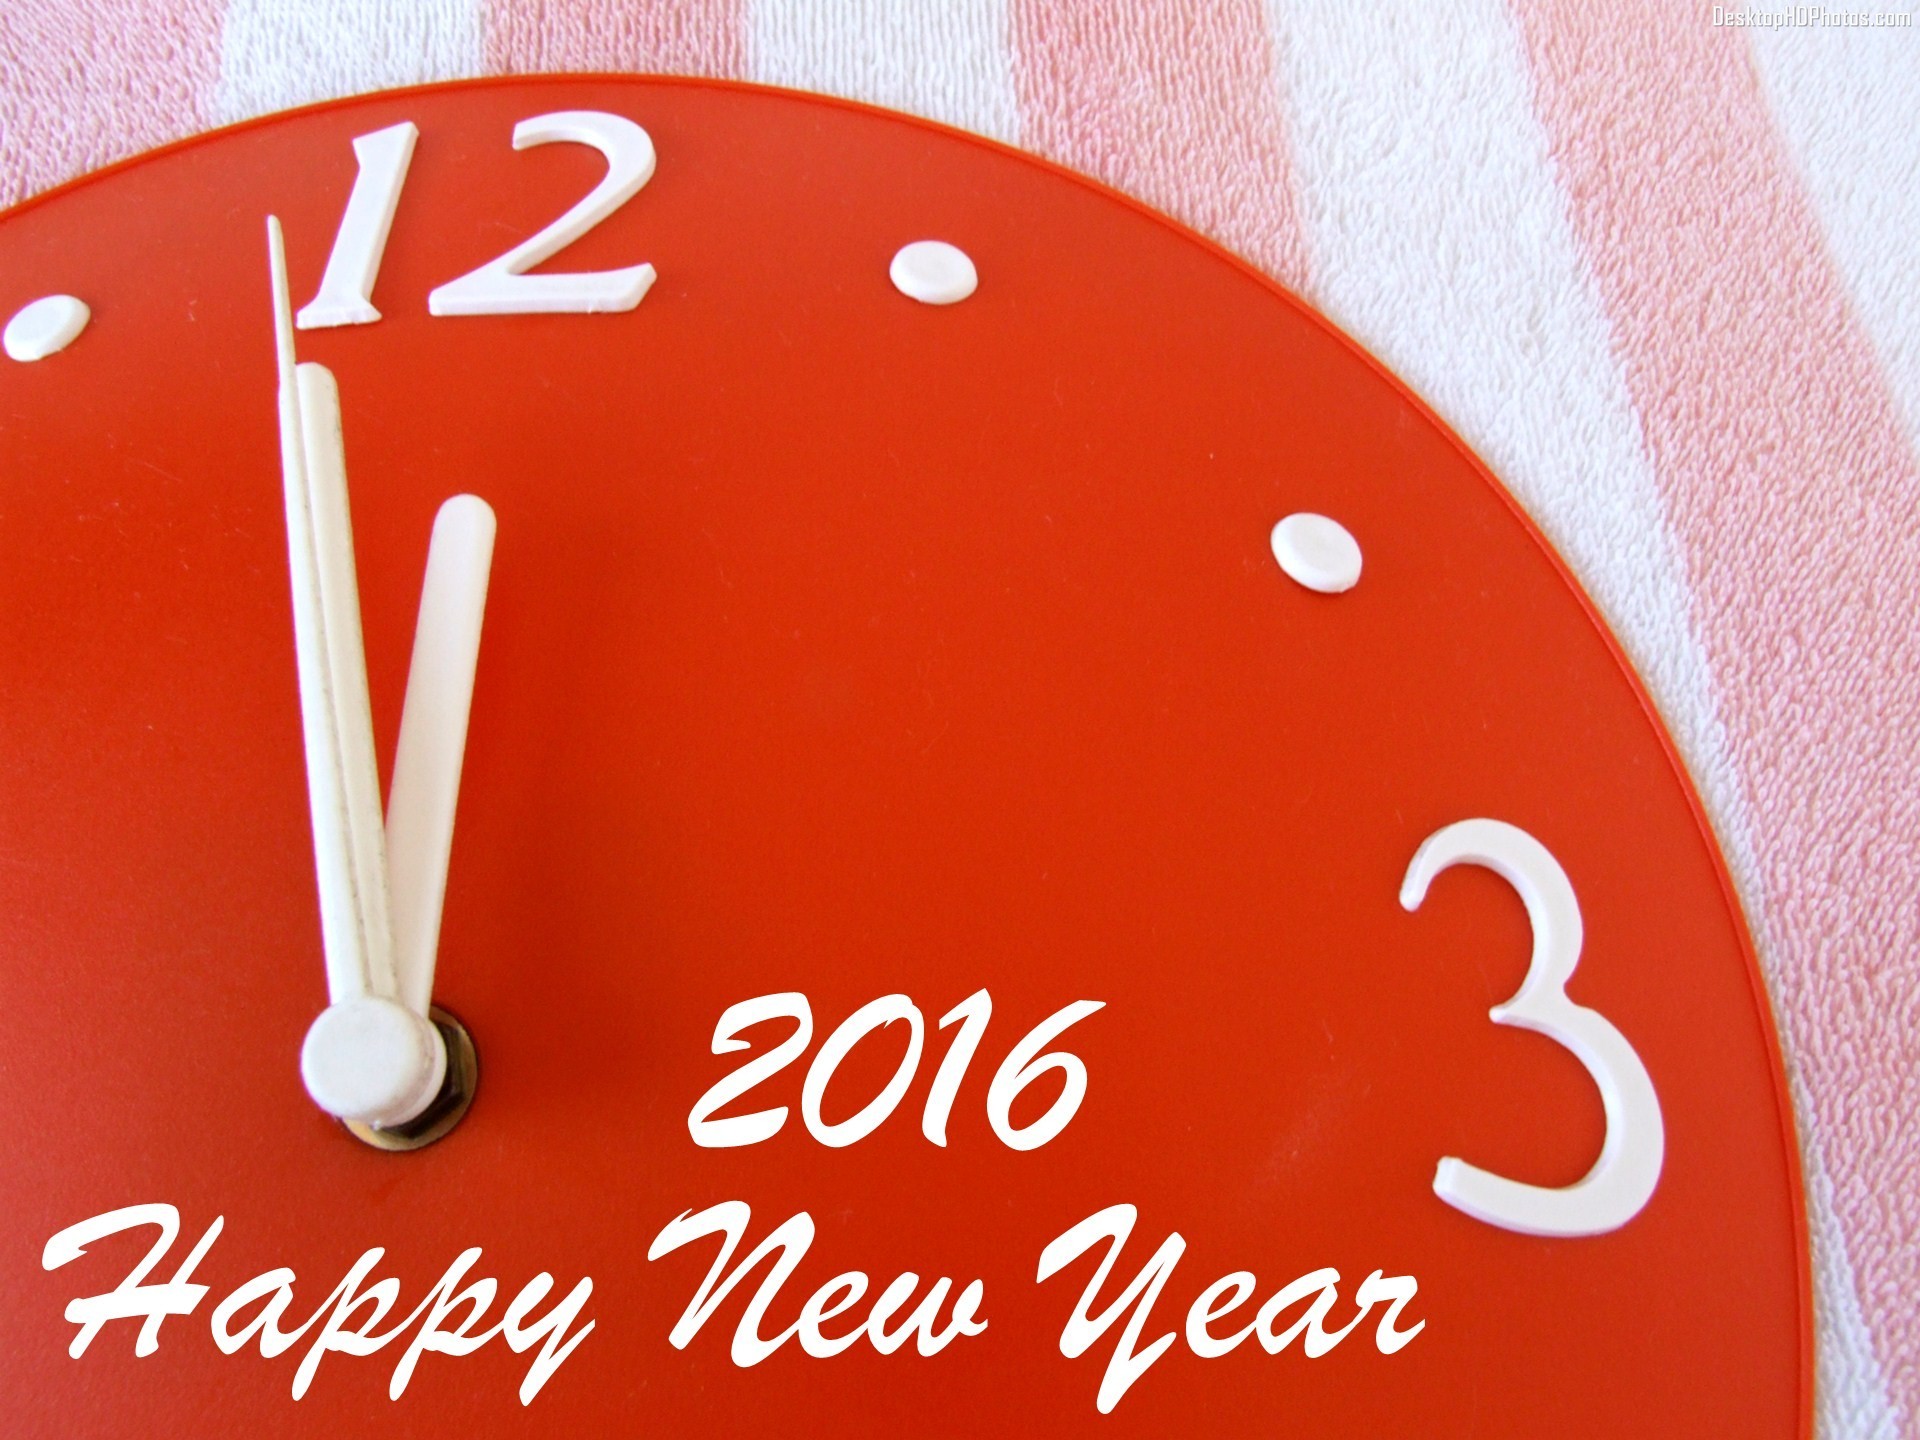 1920x1440 Countdown Begins Happy New Year 2016